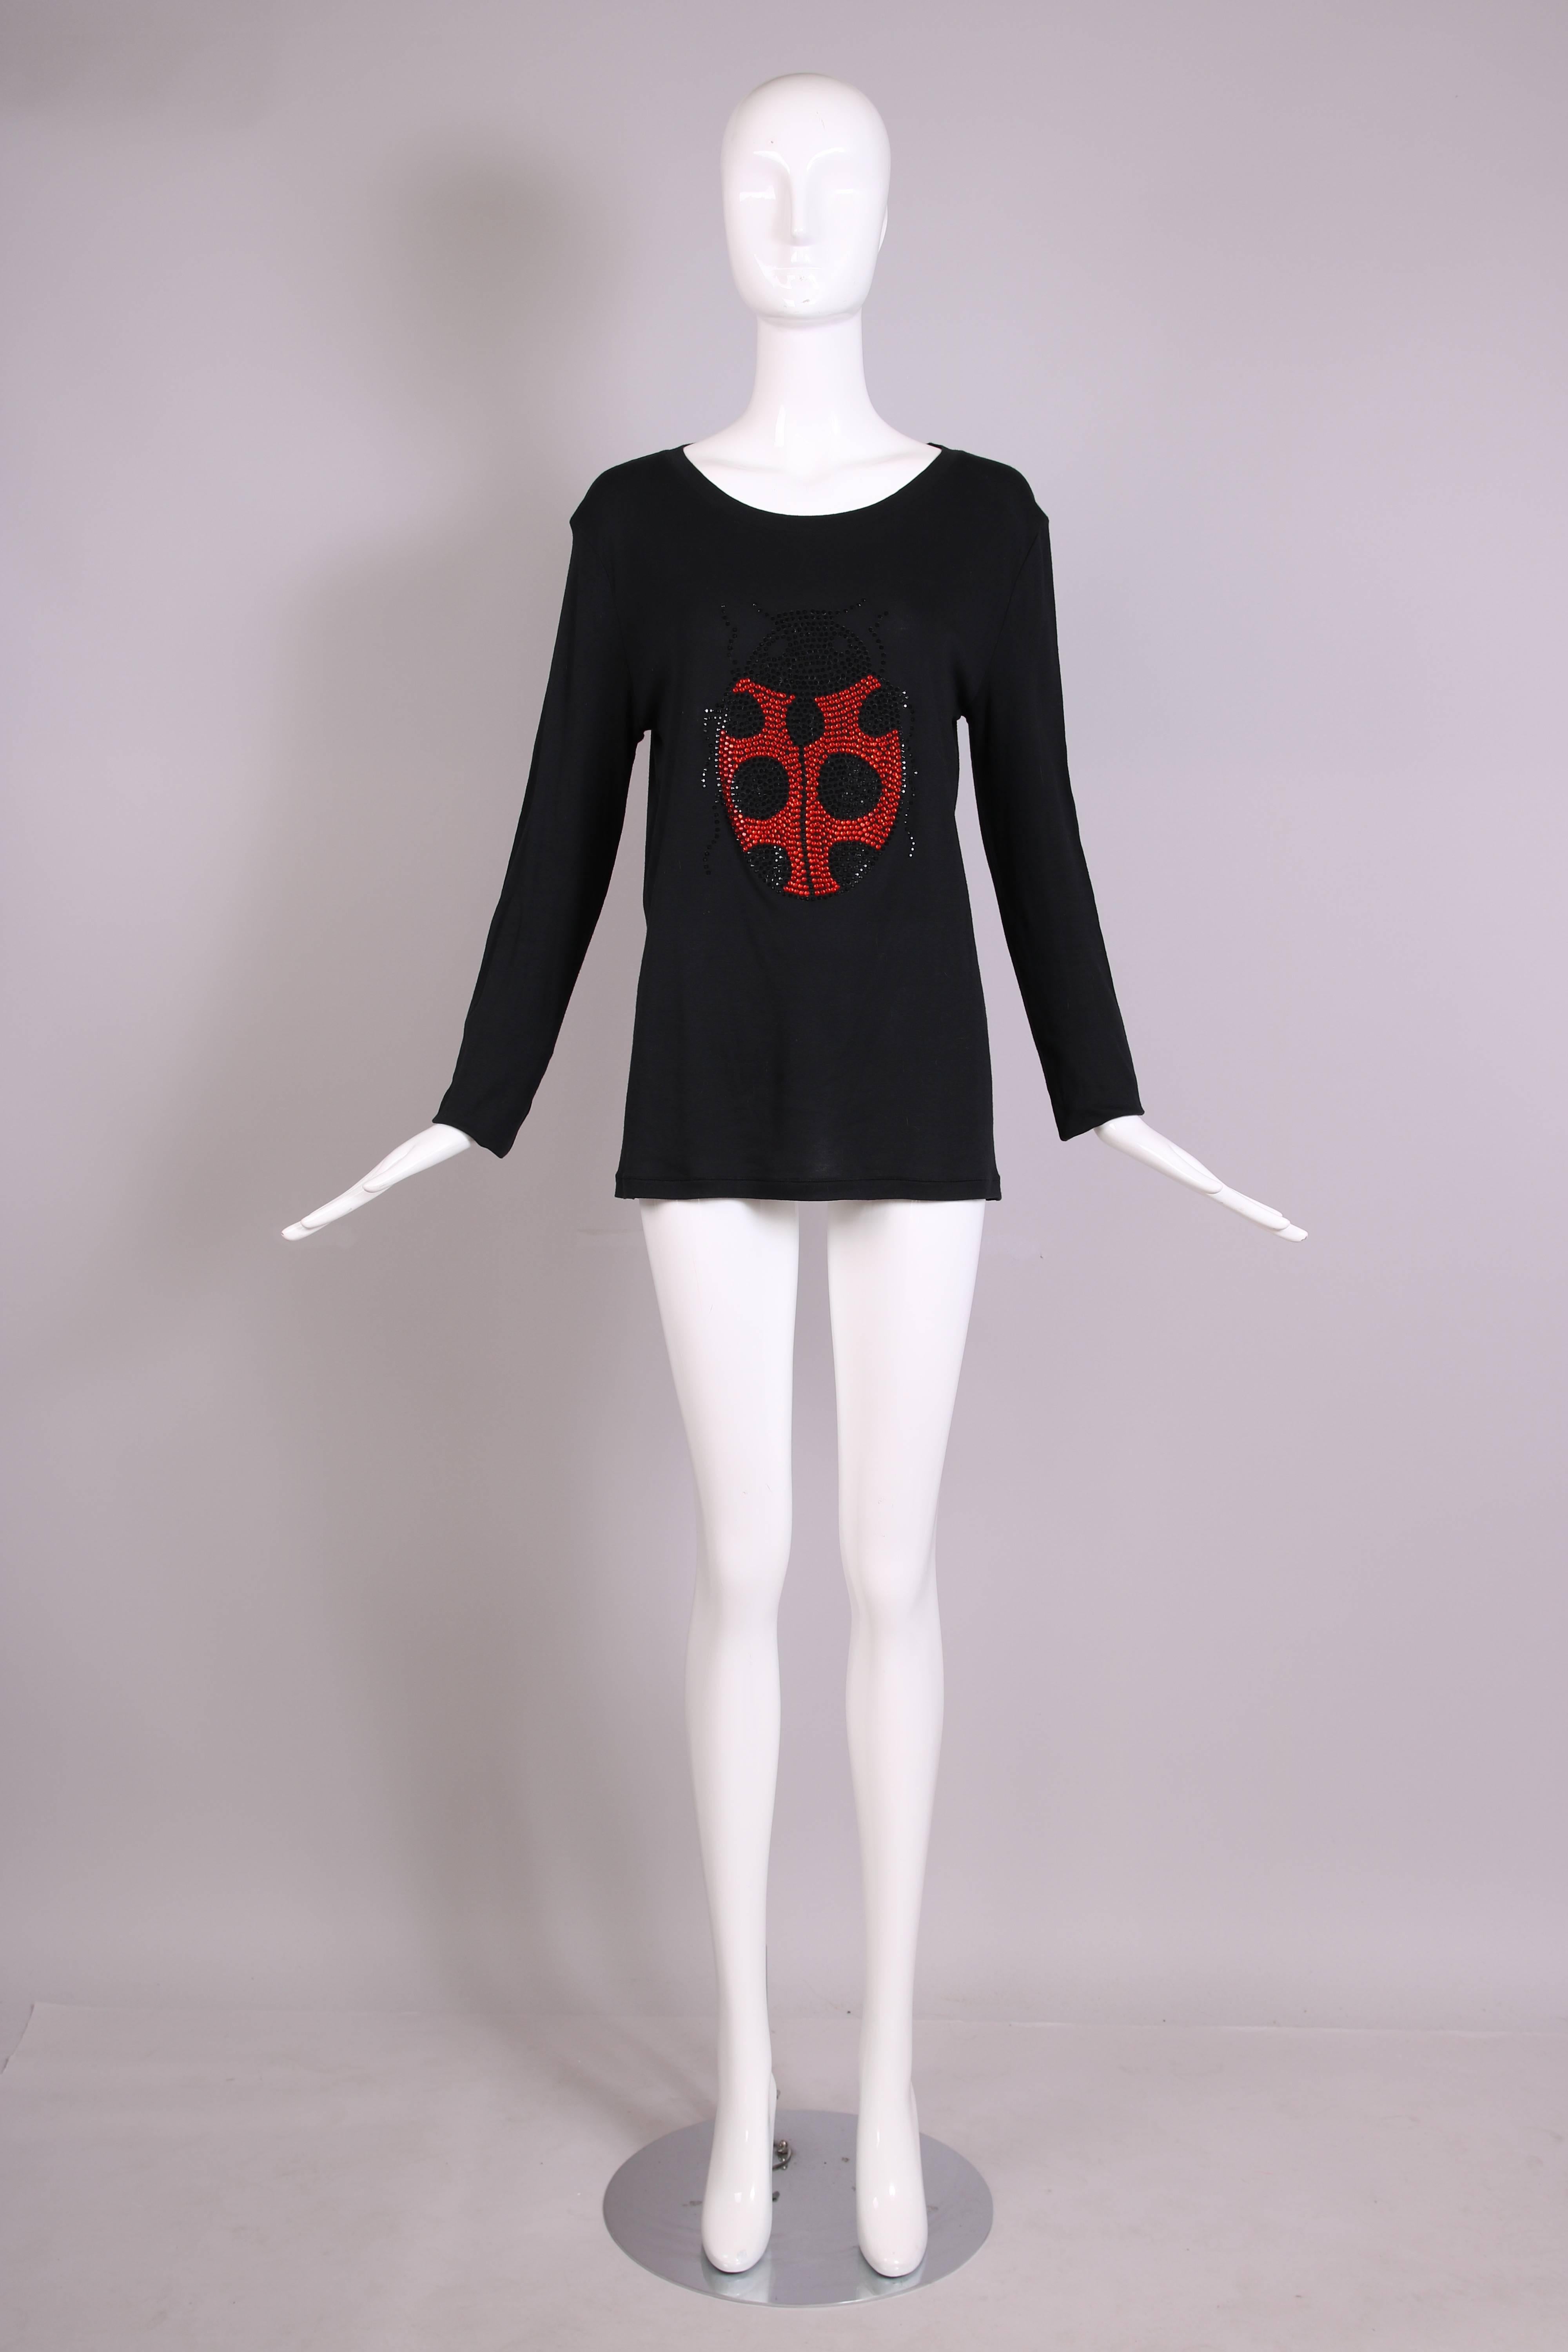 Women's Sonia Rykiel Black Cotton Long Sleeved Shirt Top w/Jeweled Ladybug Design